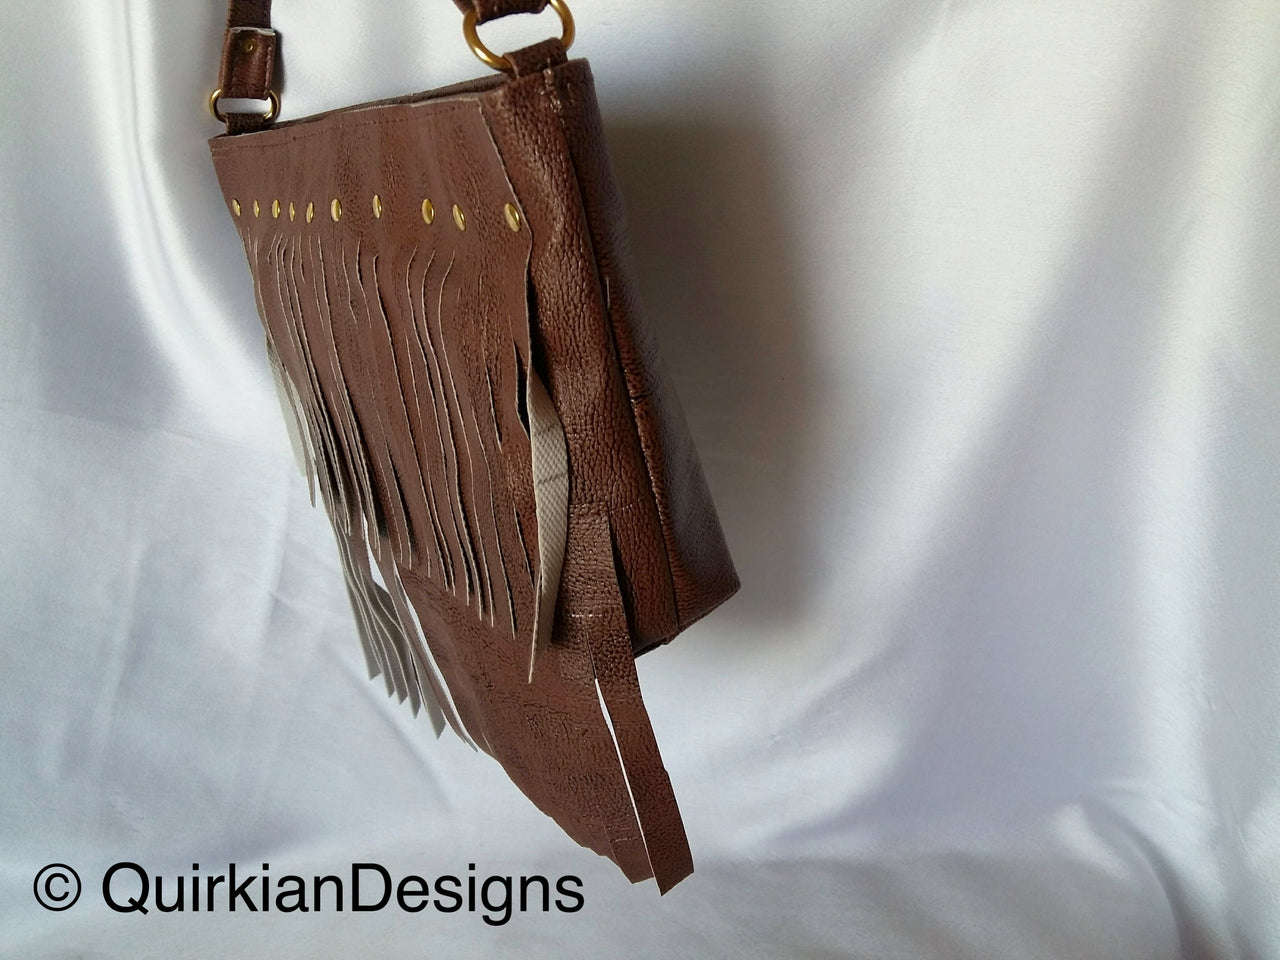 Dark Brown Fake Leather Tassels Bag, Day HandBag, Shopping Handbag, Faux Leather Bag, Office Wear